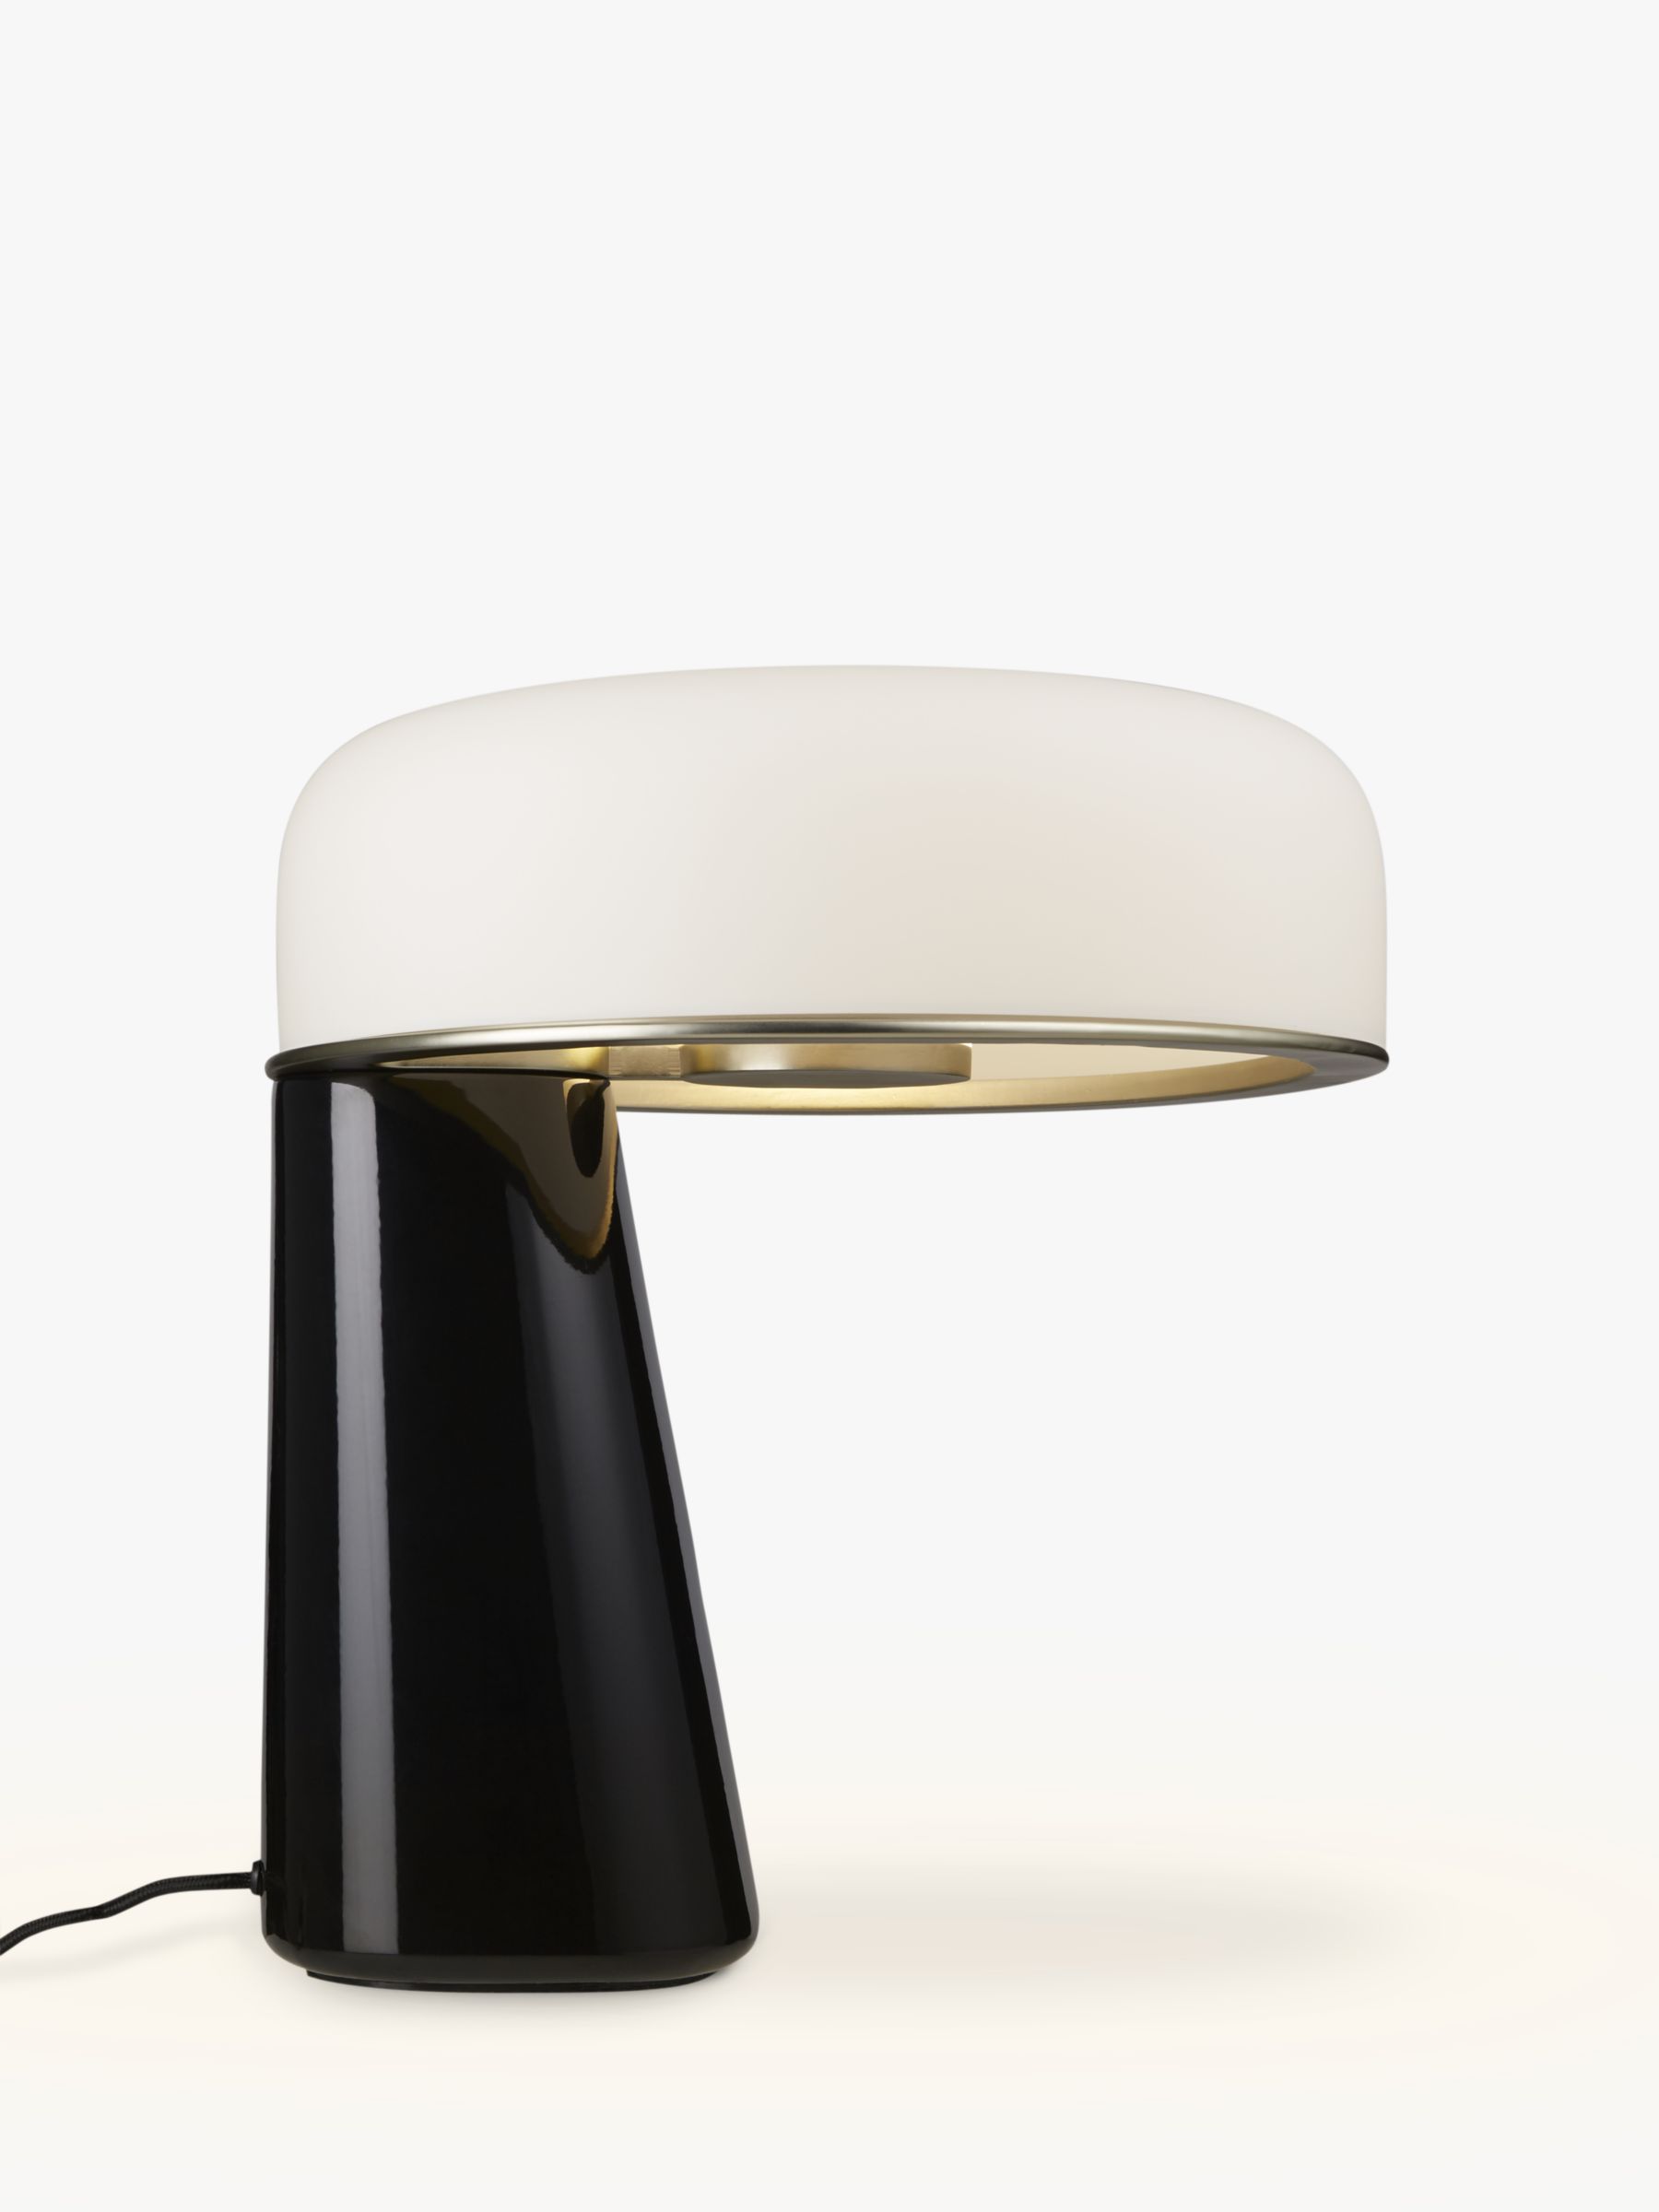 Doshi Levien for John Lewis Open Home Falcon LED Table Lamp, Black